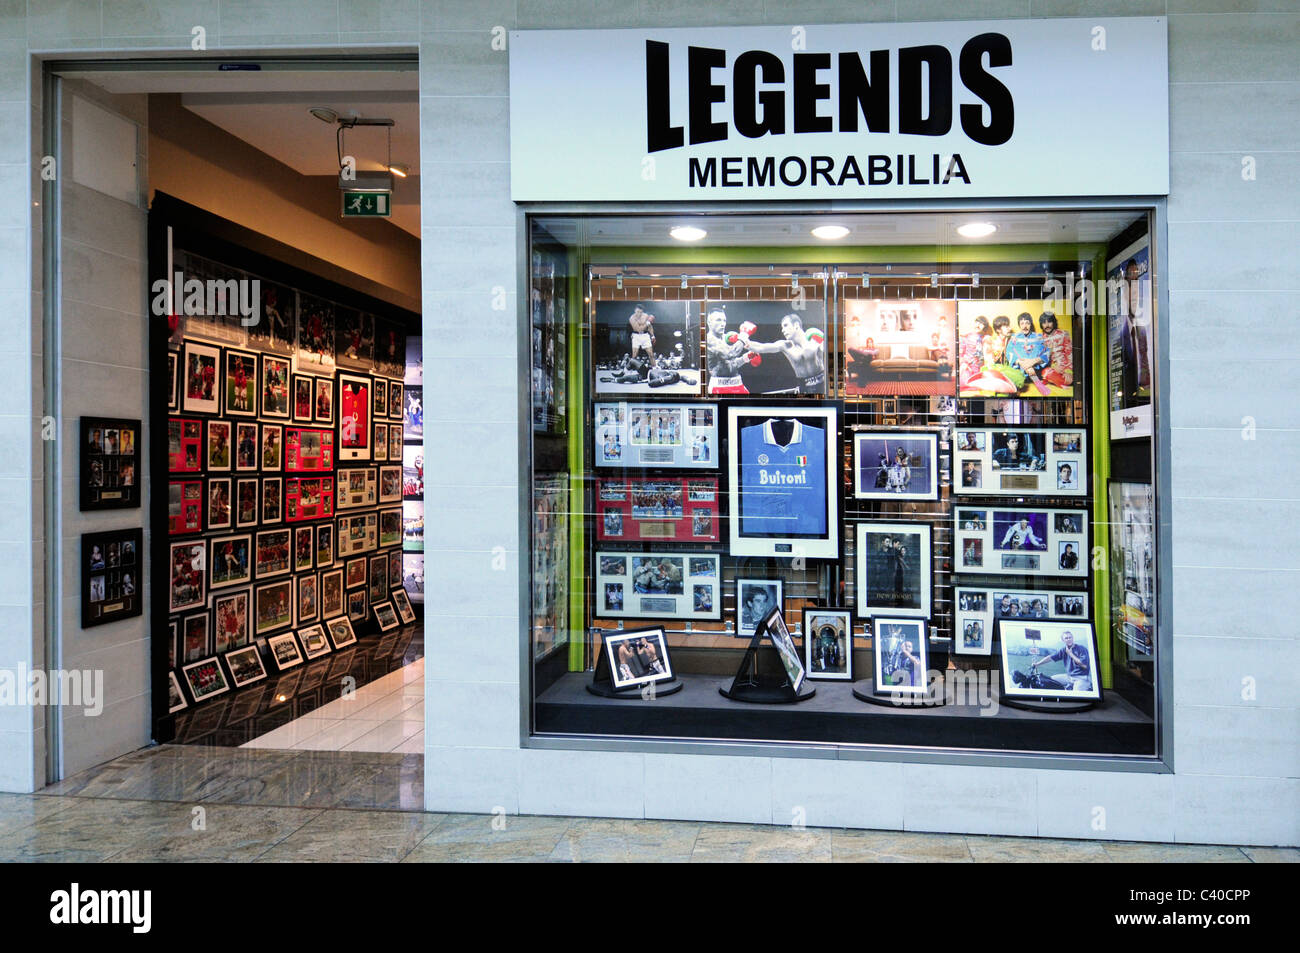 legends memorabilia posters pictures Stock Photo